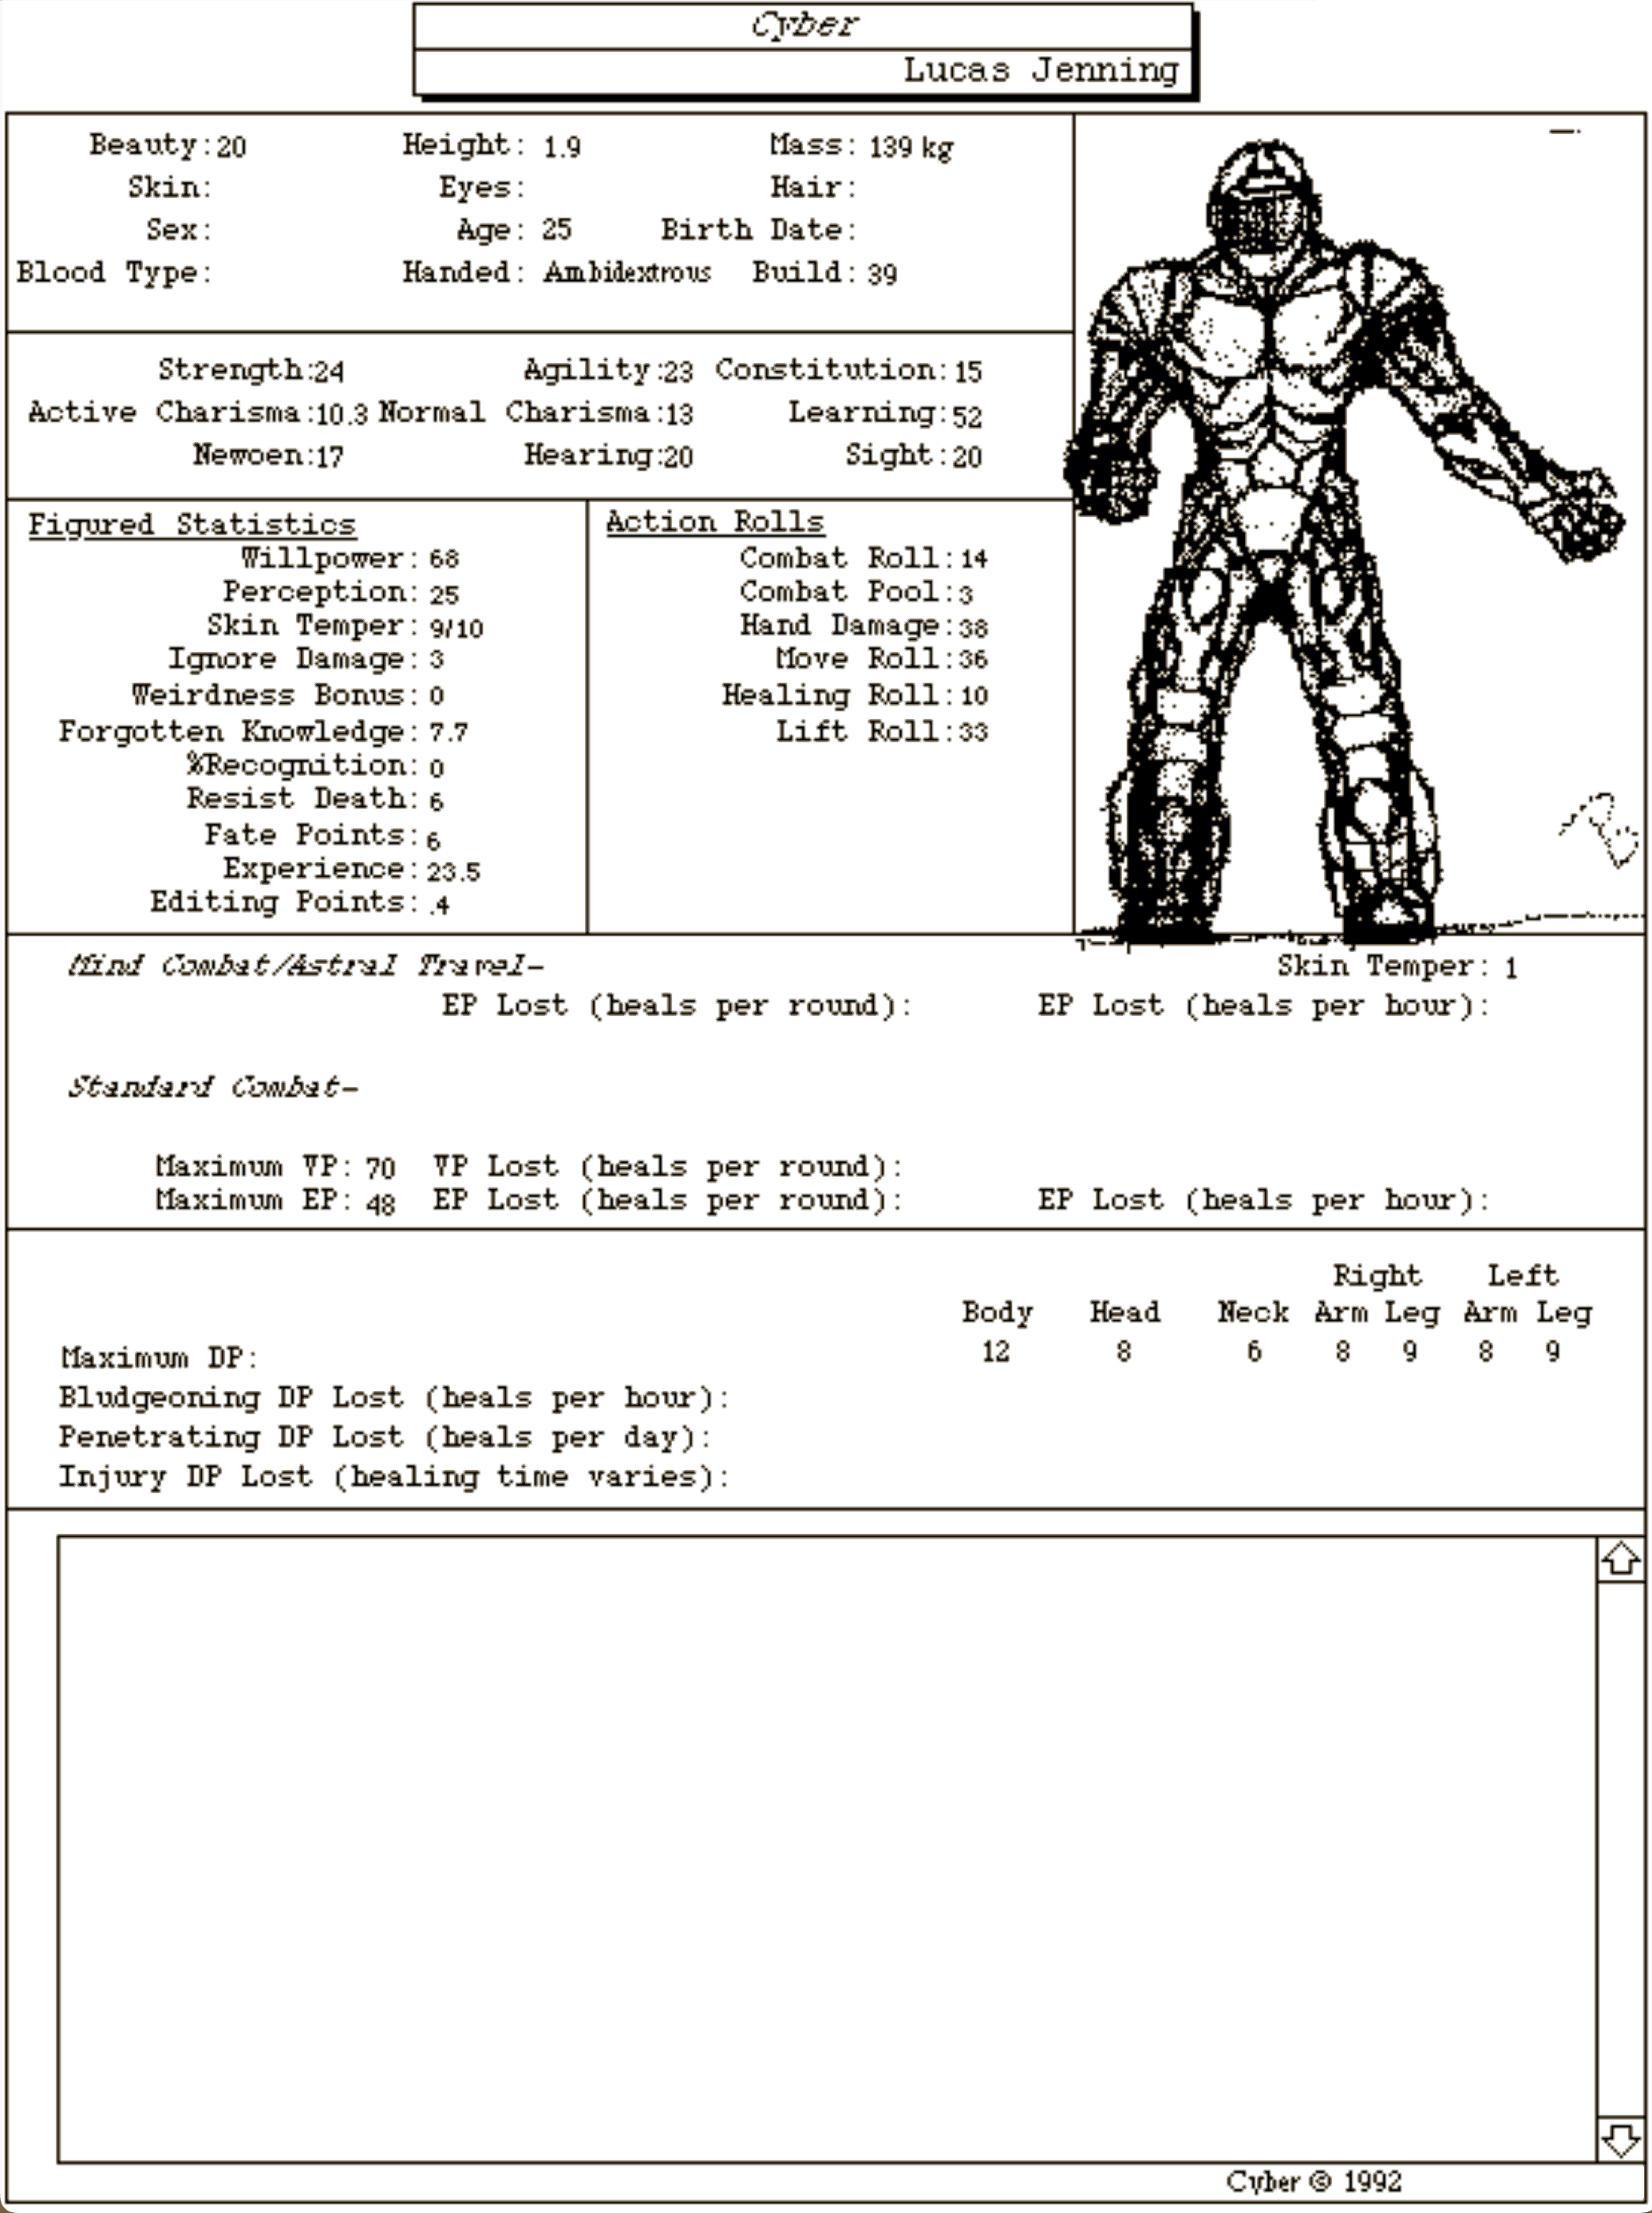 Cyber Men & Supermen character sheet: Character sheet for the player character hero “Cyber” in Men & Supermen, from an old HyperCard Stack.; Men & Supermen; HyperCard